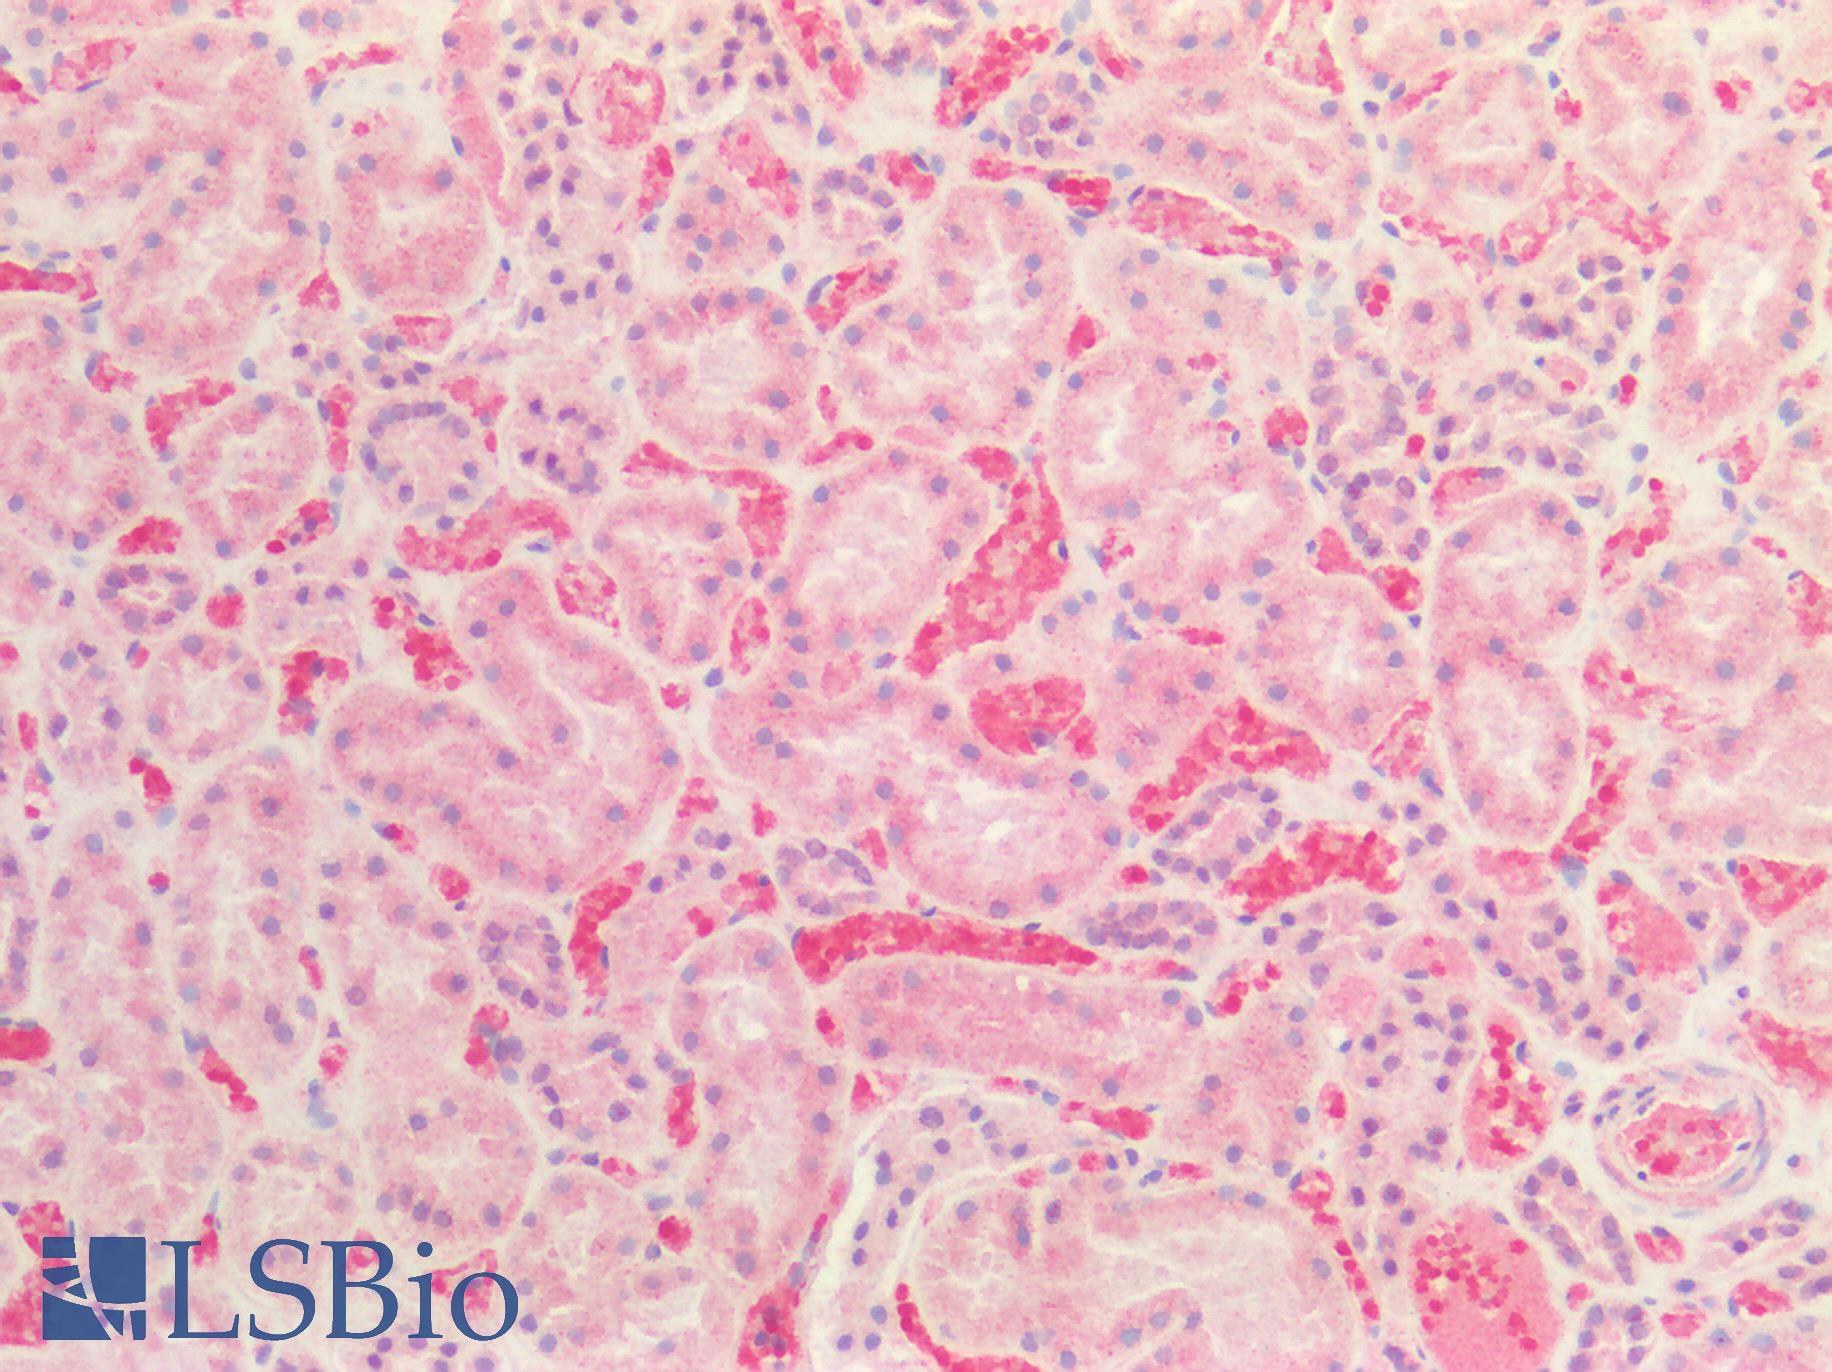 CTSS / Cathepsin S Antibody - Human Kidney: Formalin-Fixed, Paraffin-Embedded (FFPE)